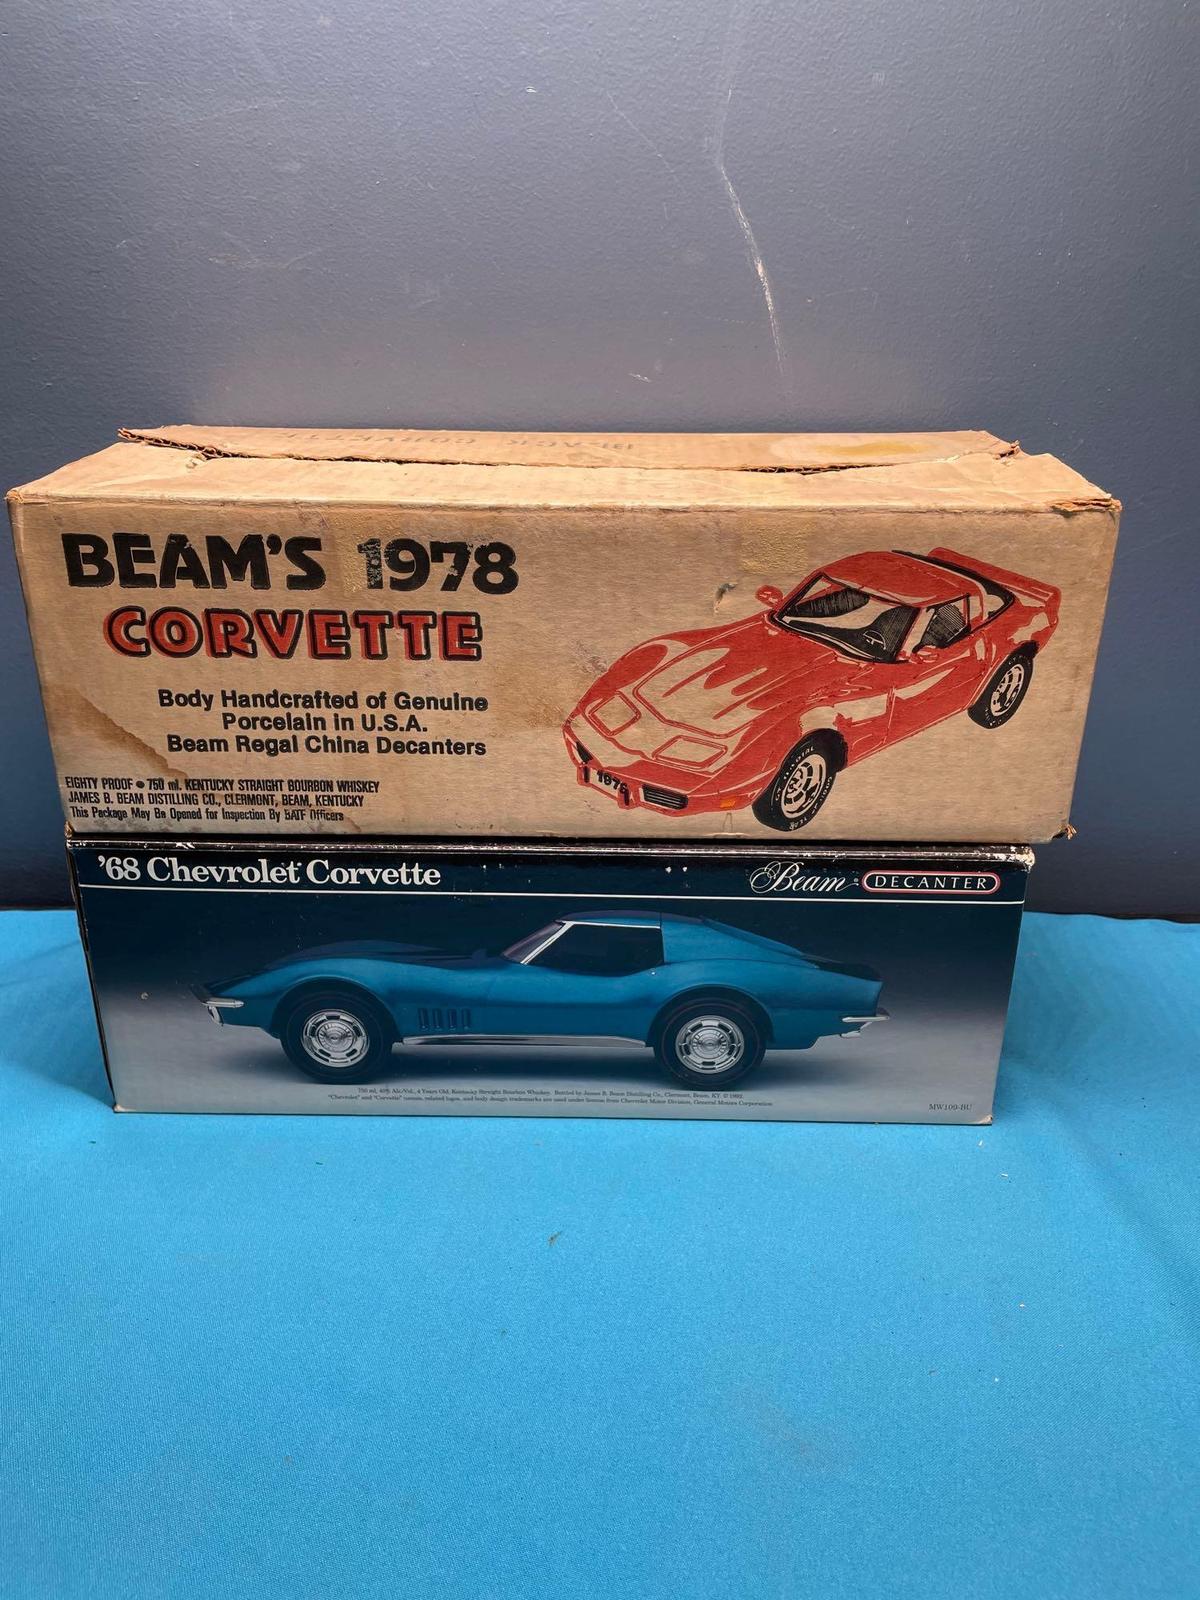 Beam?s 1978 and 1968 Corvette decanters